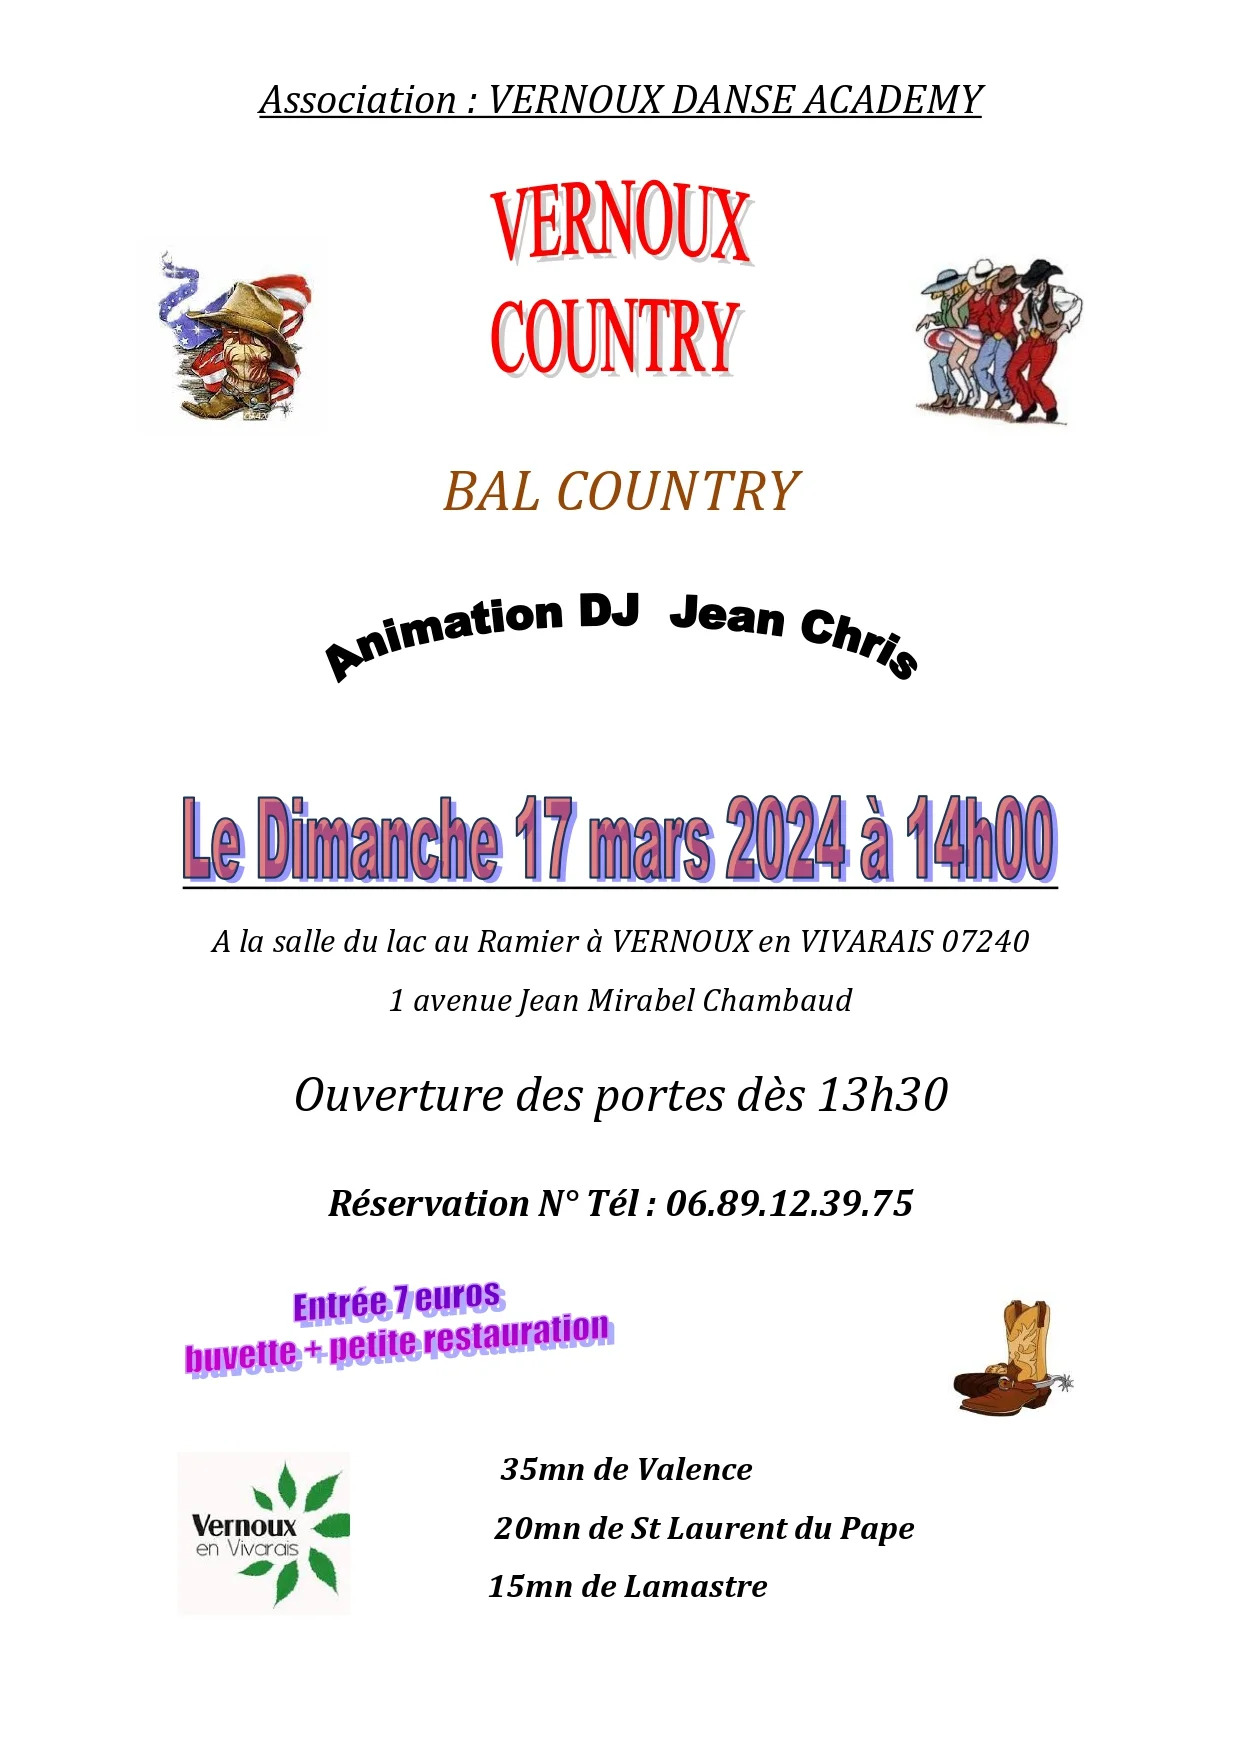 Alle leuke evenementen! : Bal country